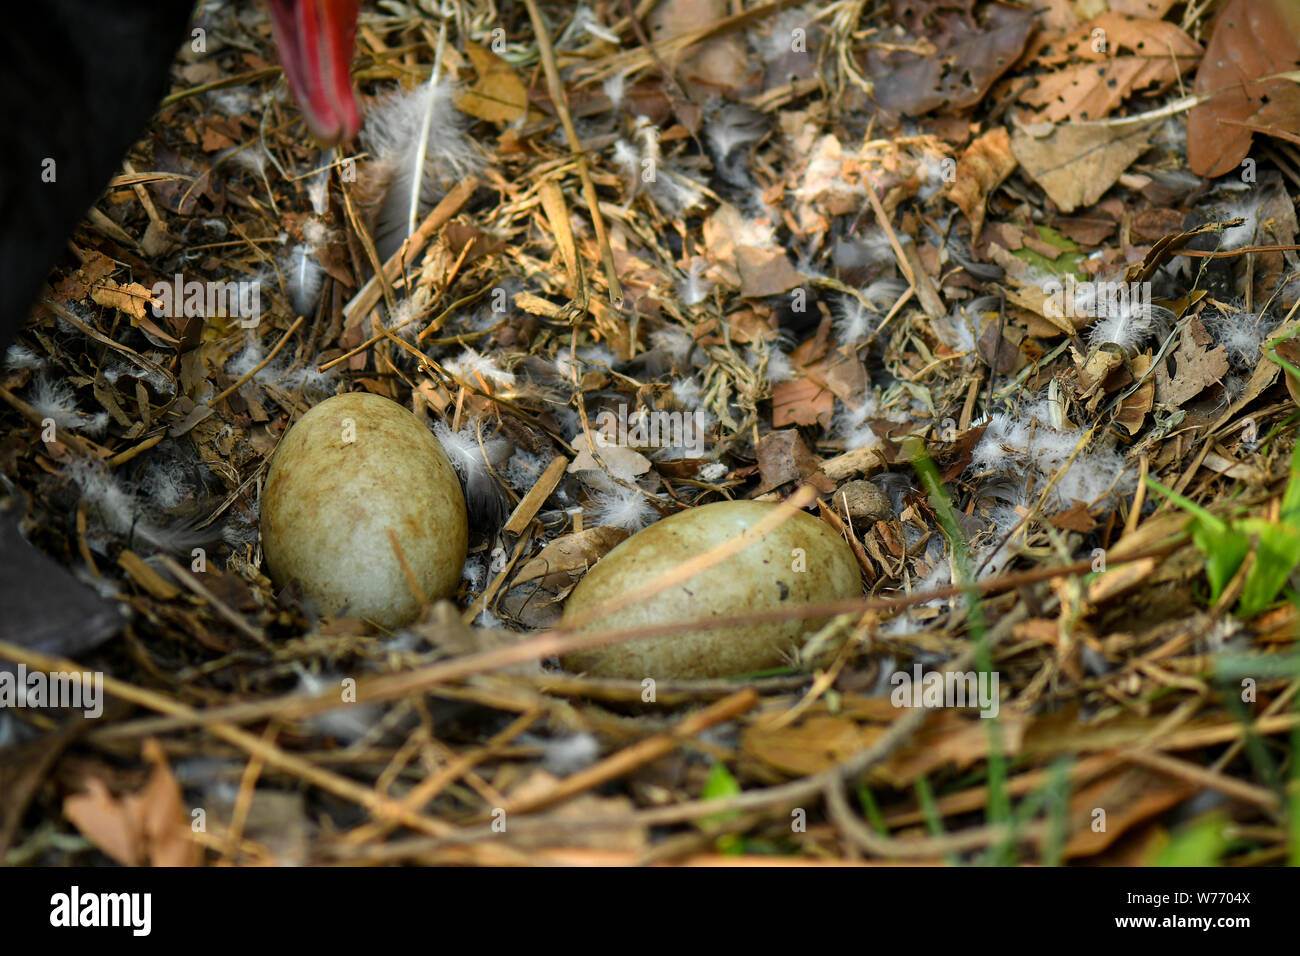 Black Swan nesting eggs in nature enviroment Stock Photo